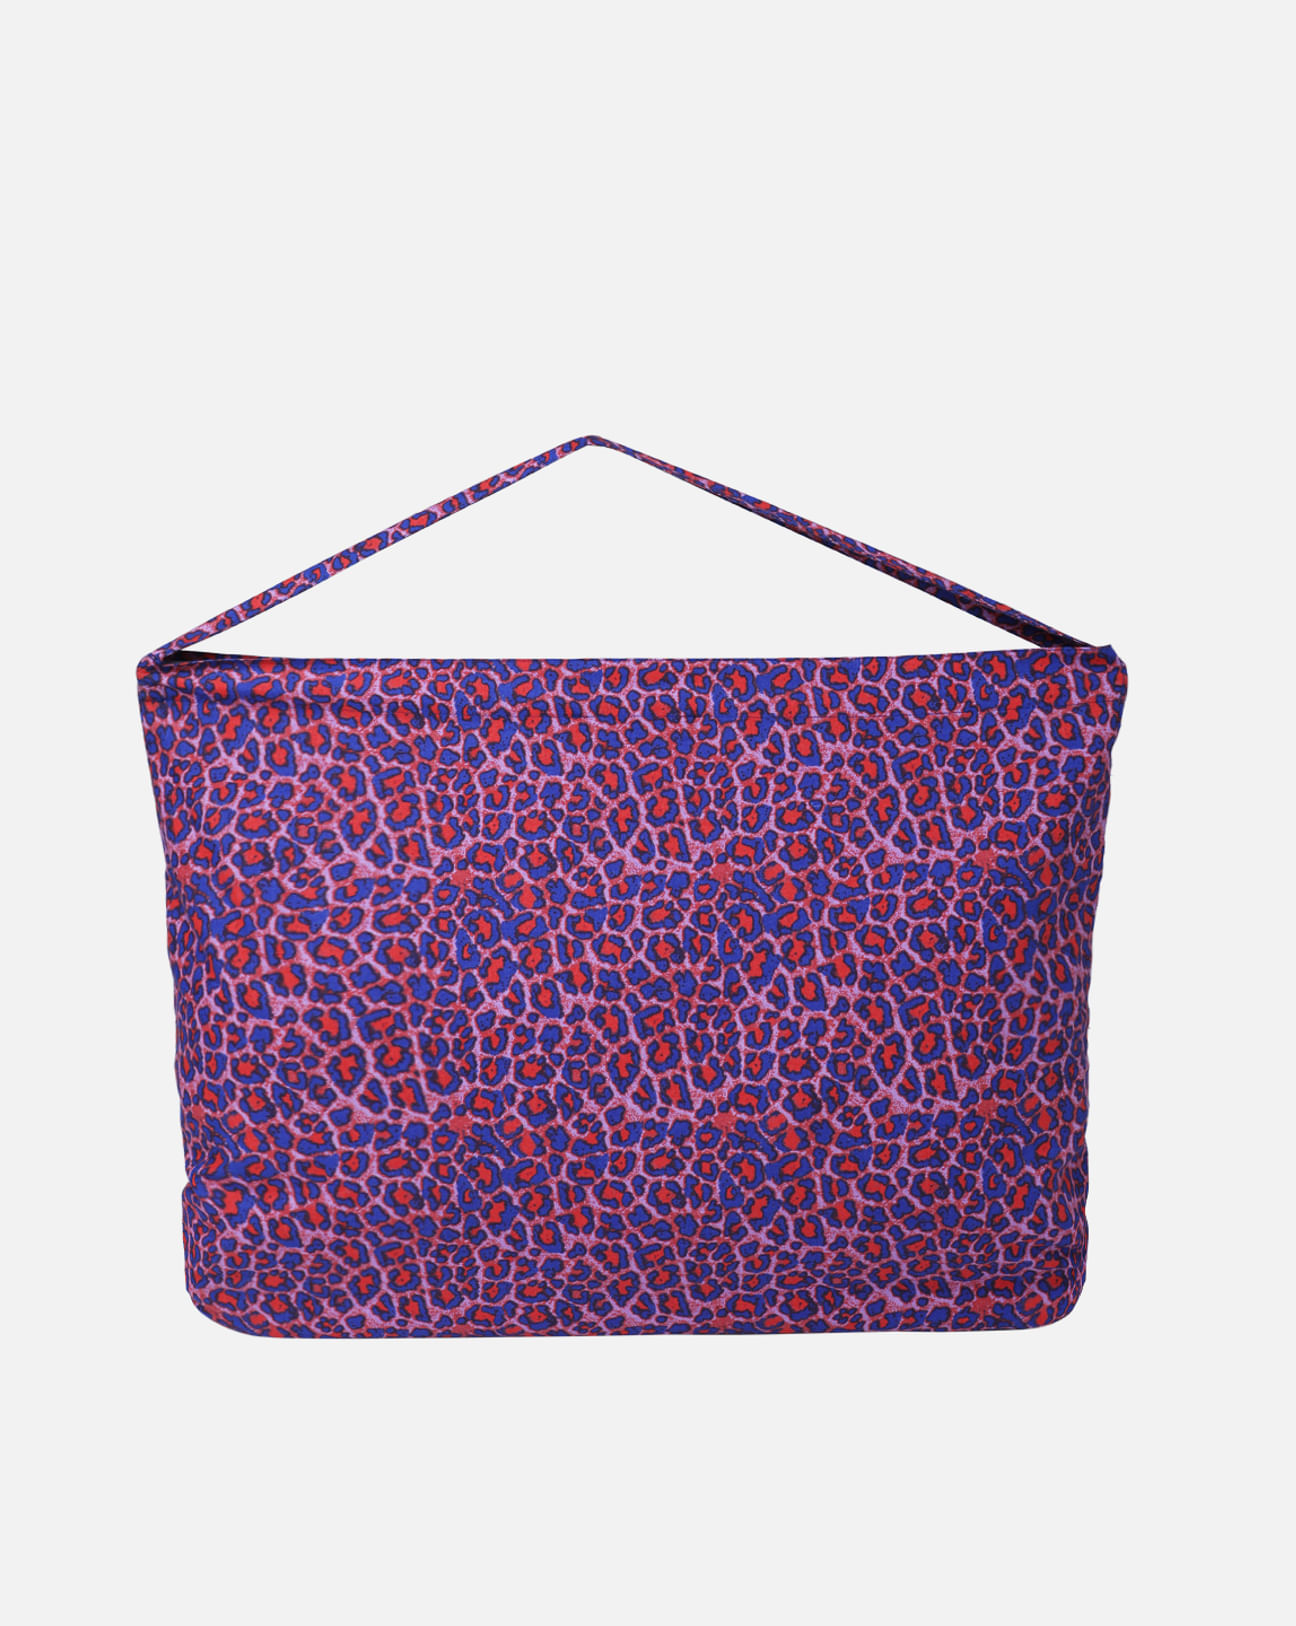 VERO MODA Purple Animal Print Organic Cotton Tote Bag